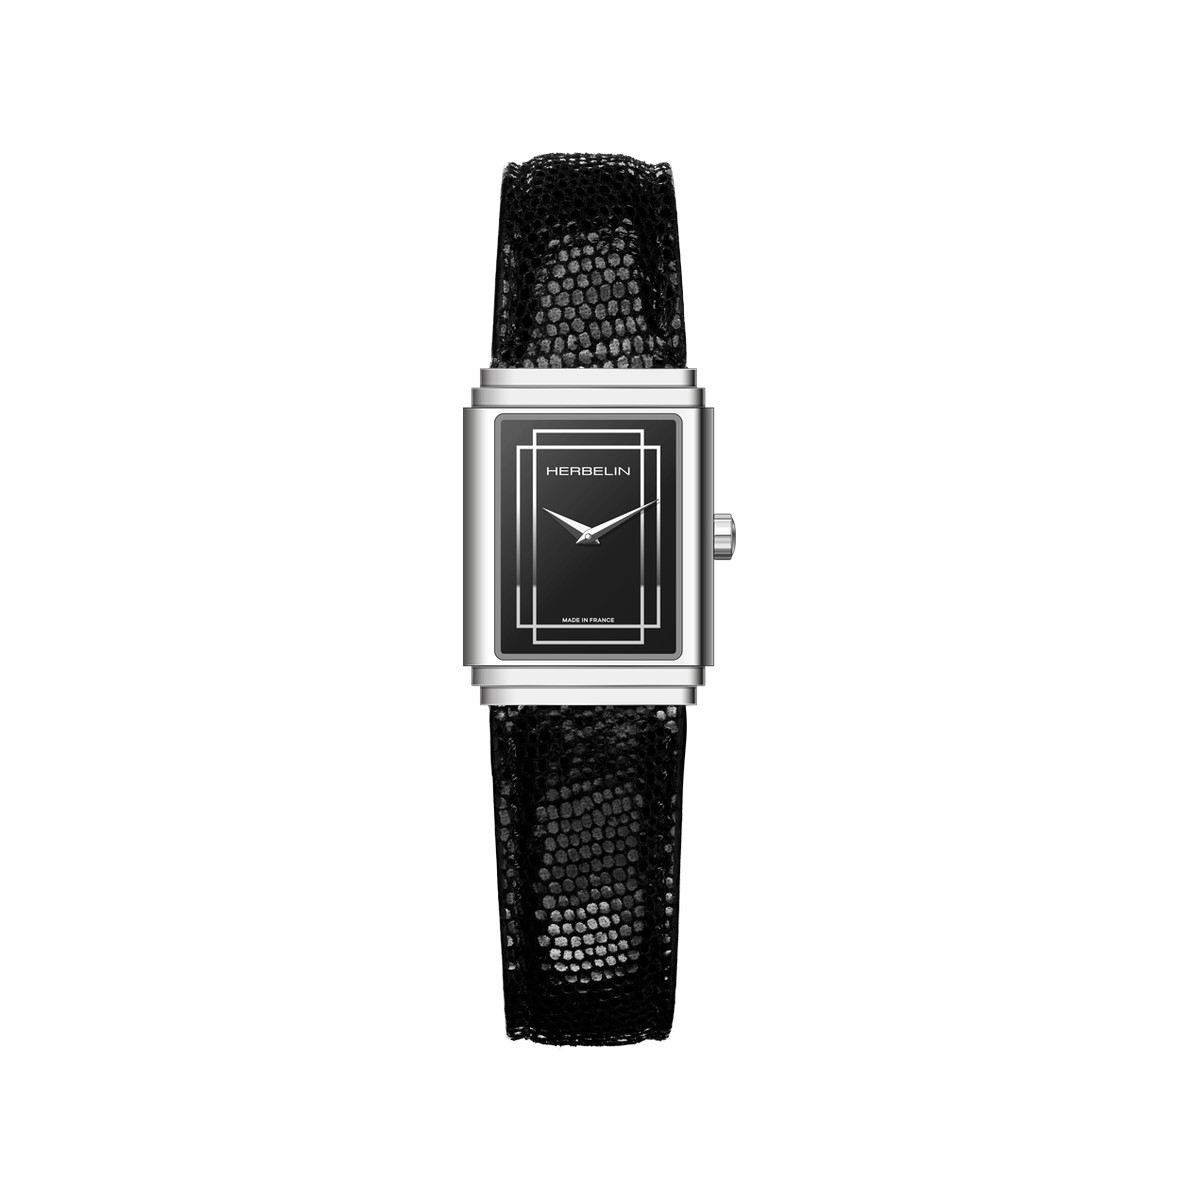 Montre HERBELIN Art Deco femme bracelet cuir noir